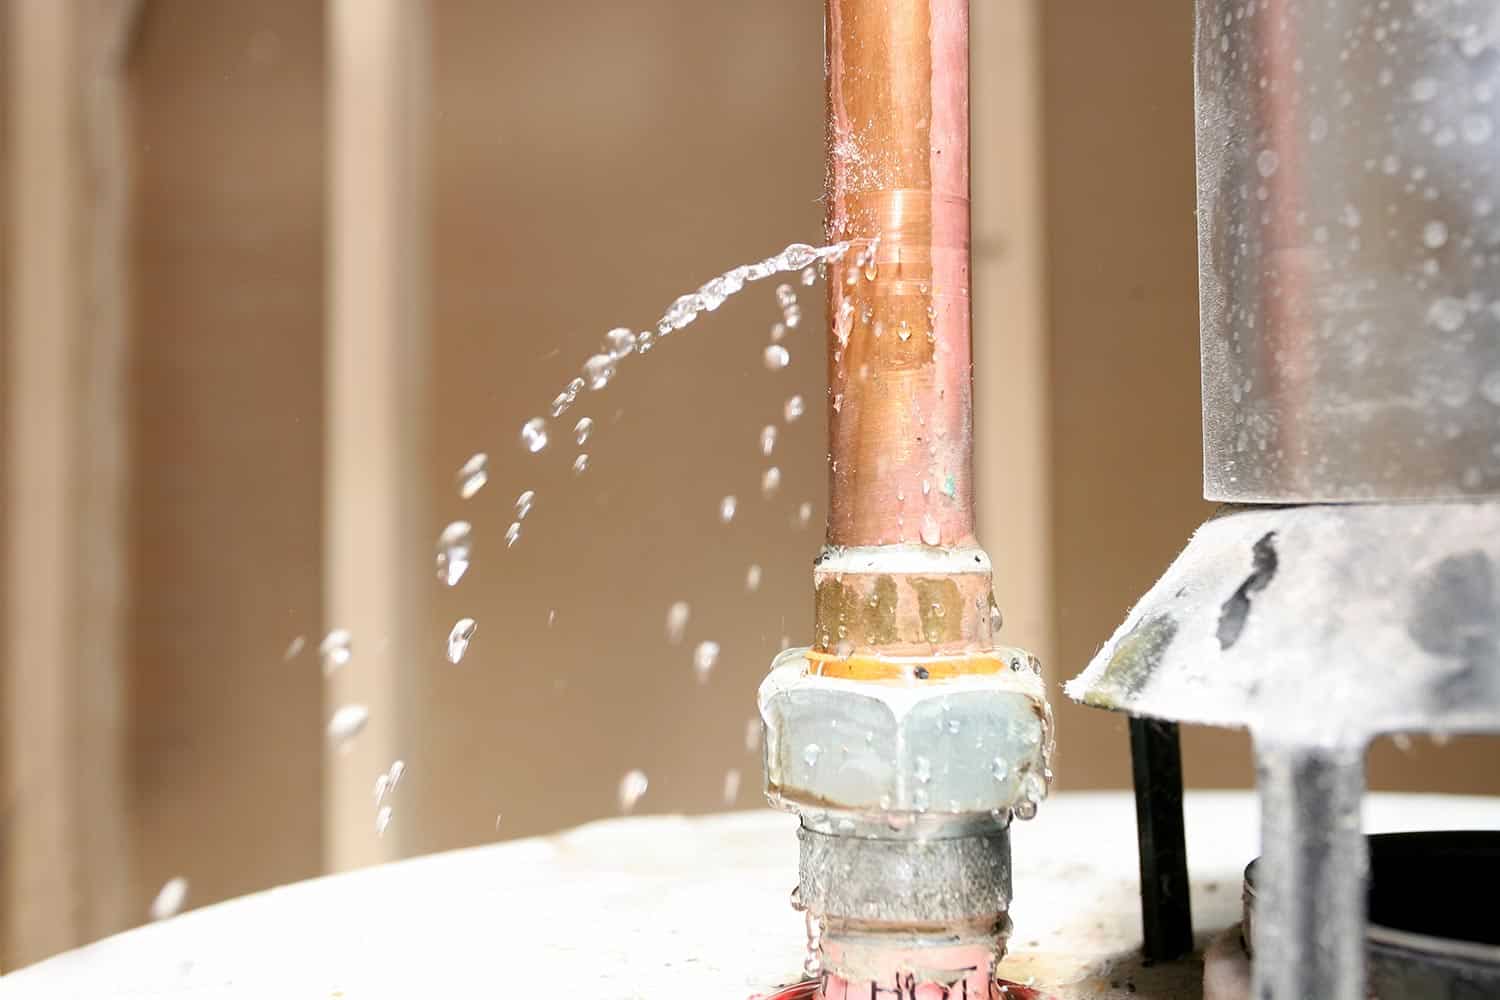 Drain pipe leaking water